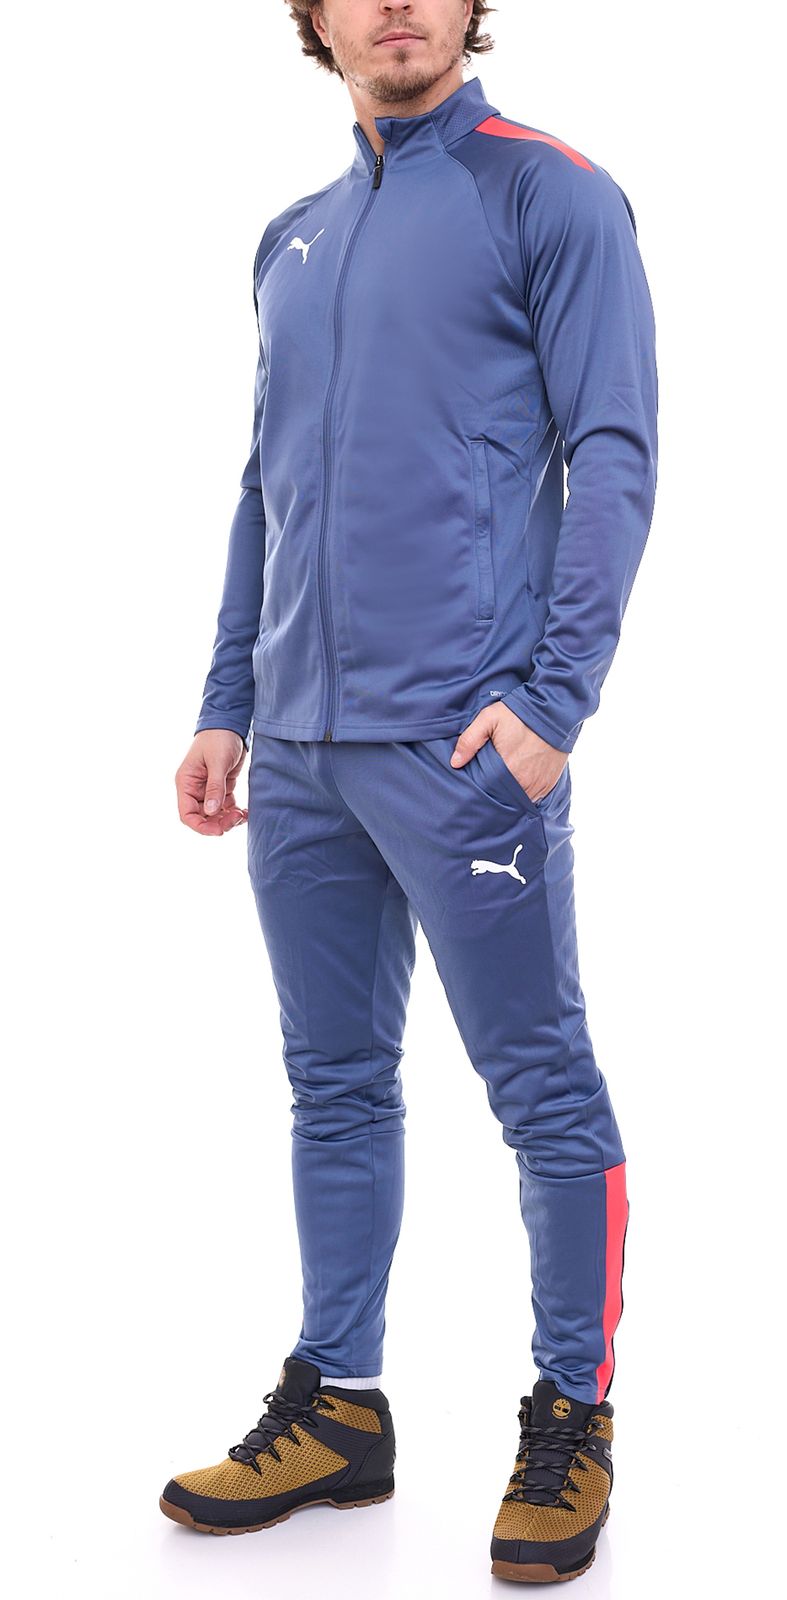 PUMA Teamliga Herren Trainings-Anzug trendiger Sport-Anzug mit dryCELL-Technologie 658525 53 Blau/Rot von PUMA